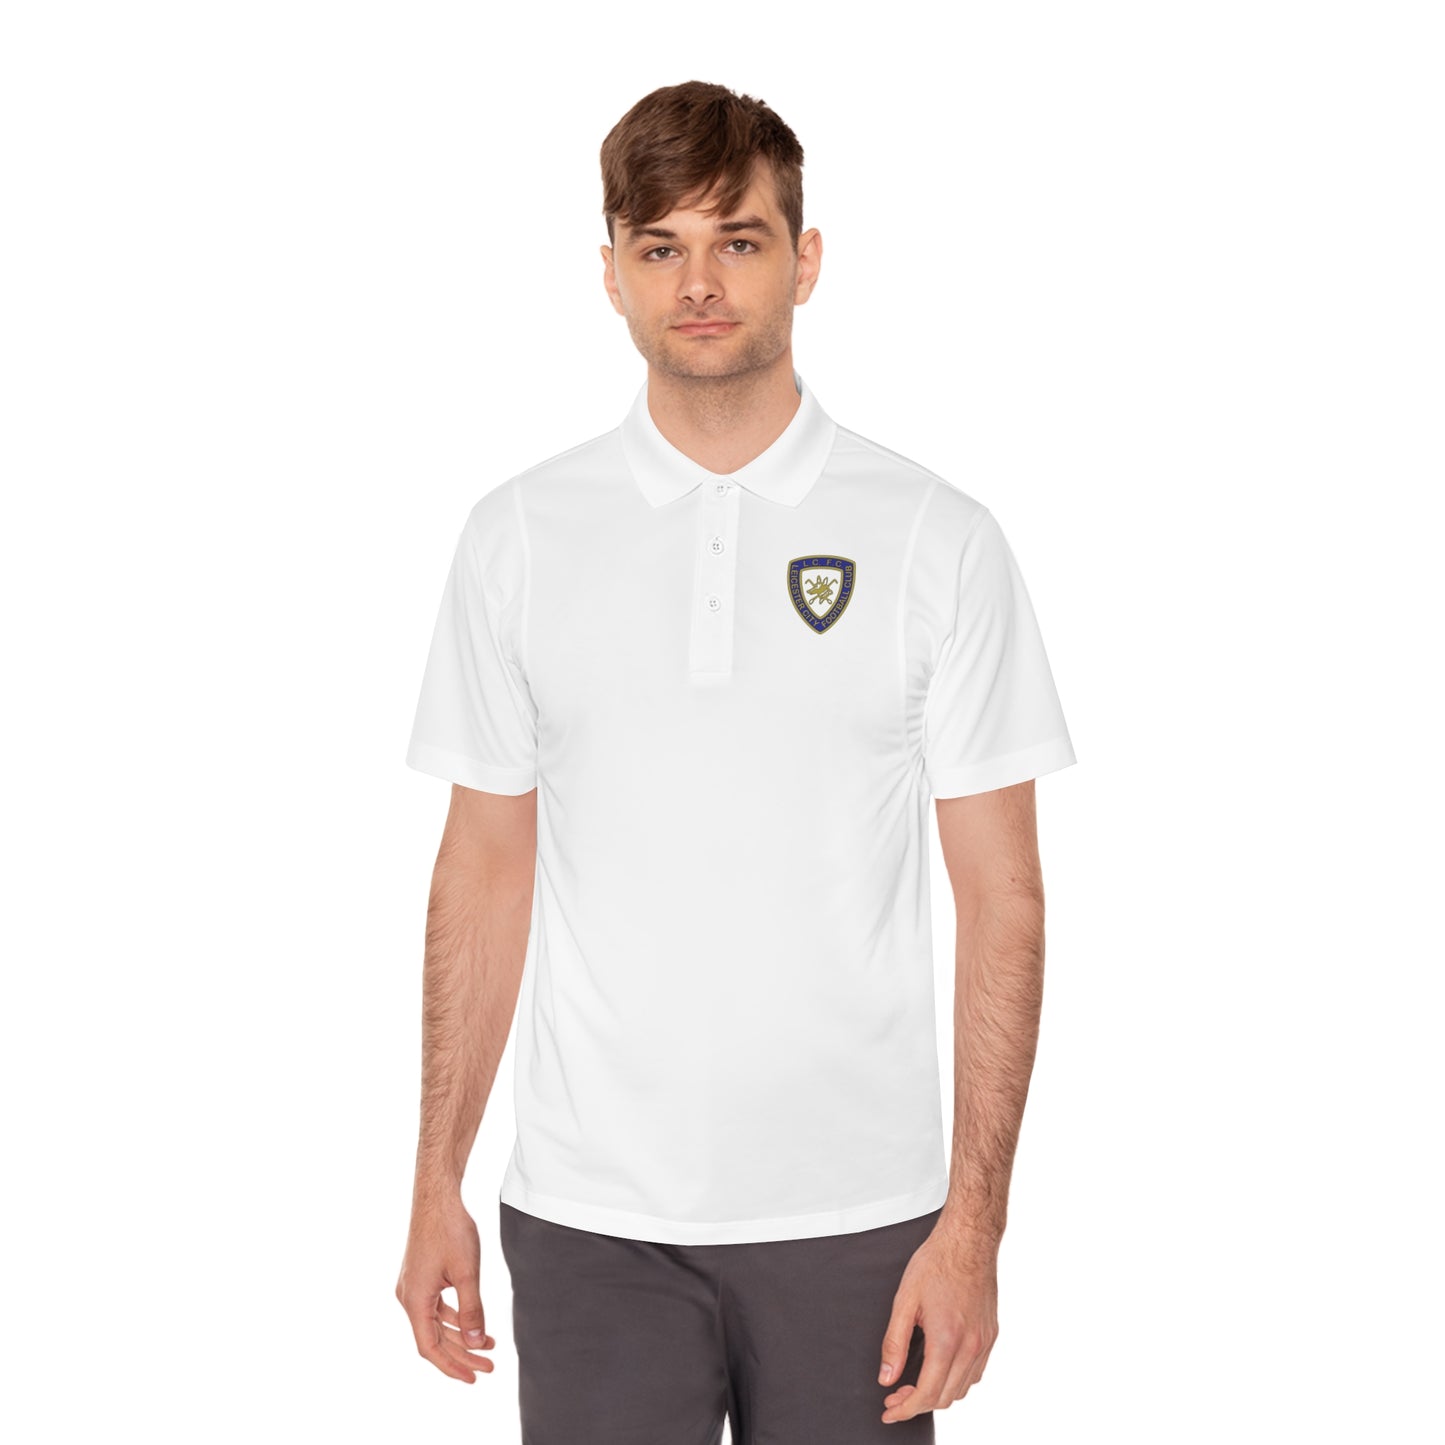 FC Leicester City (60's - 70's logo) Men's Sport Polo Shirt